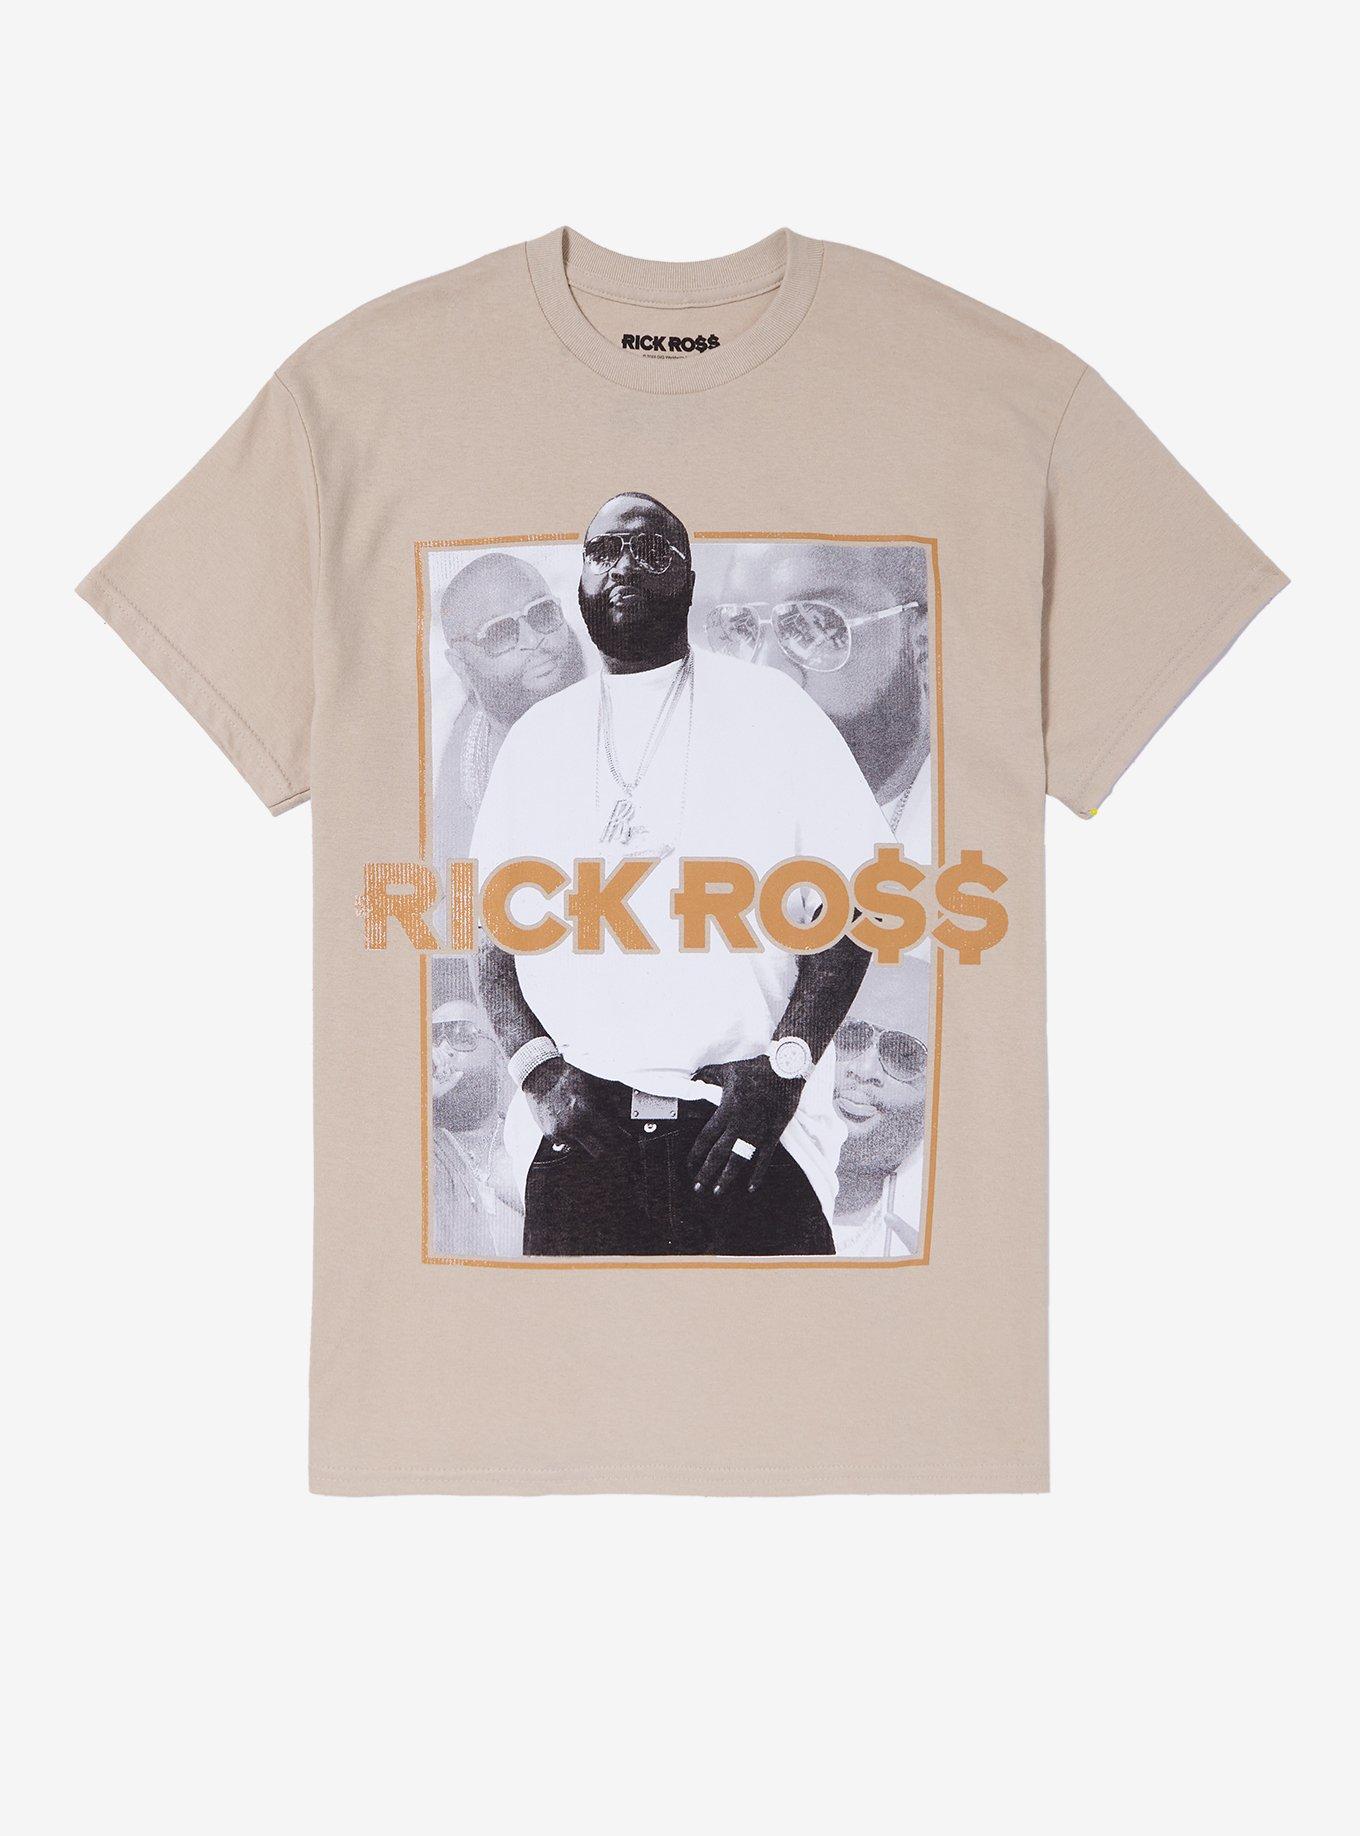 Rick Ross Photo Collage T-Shirt, NATURAL, hi-res